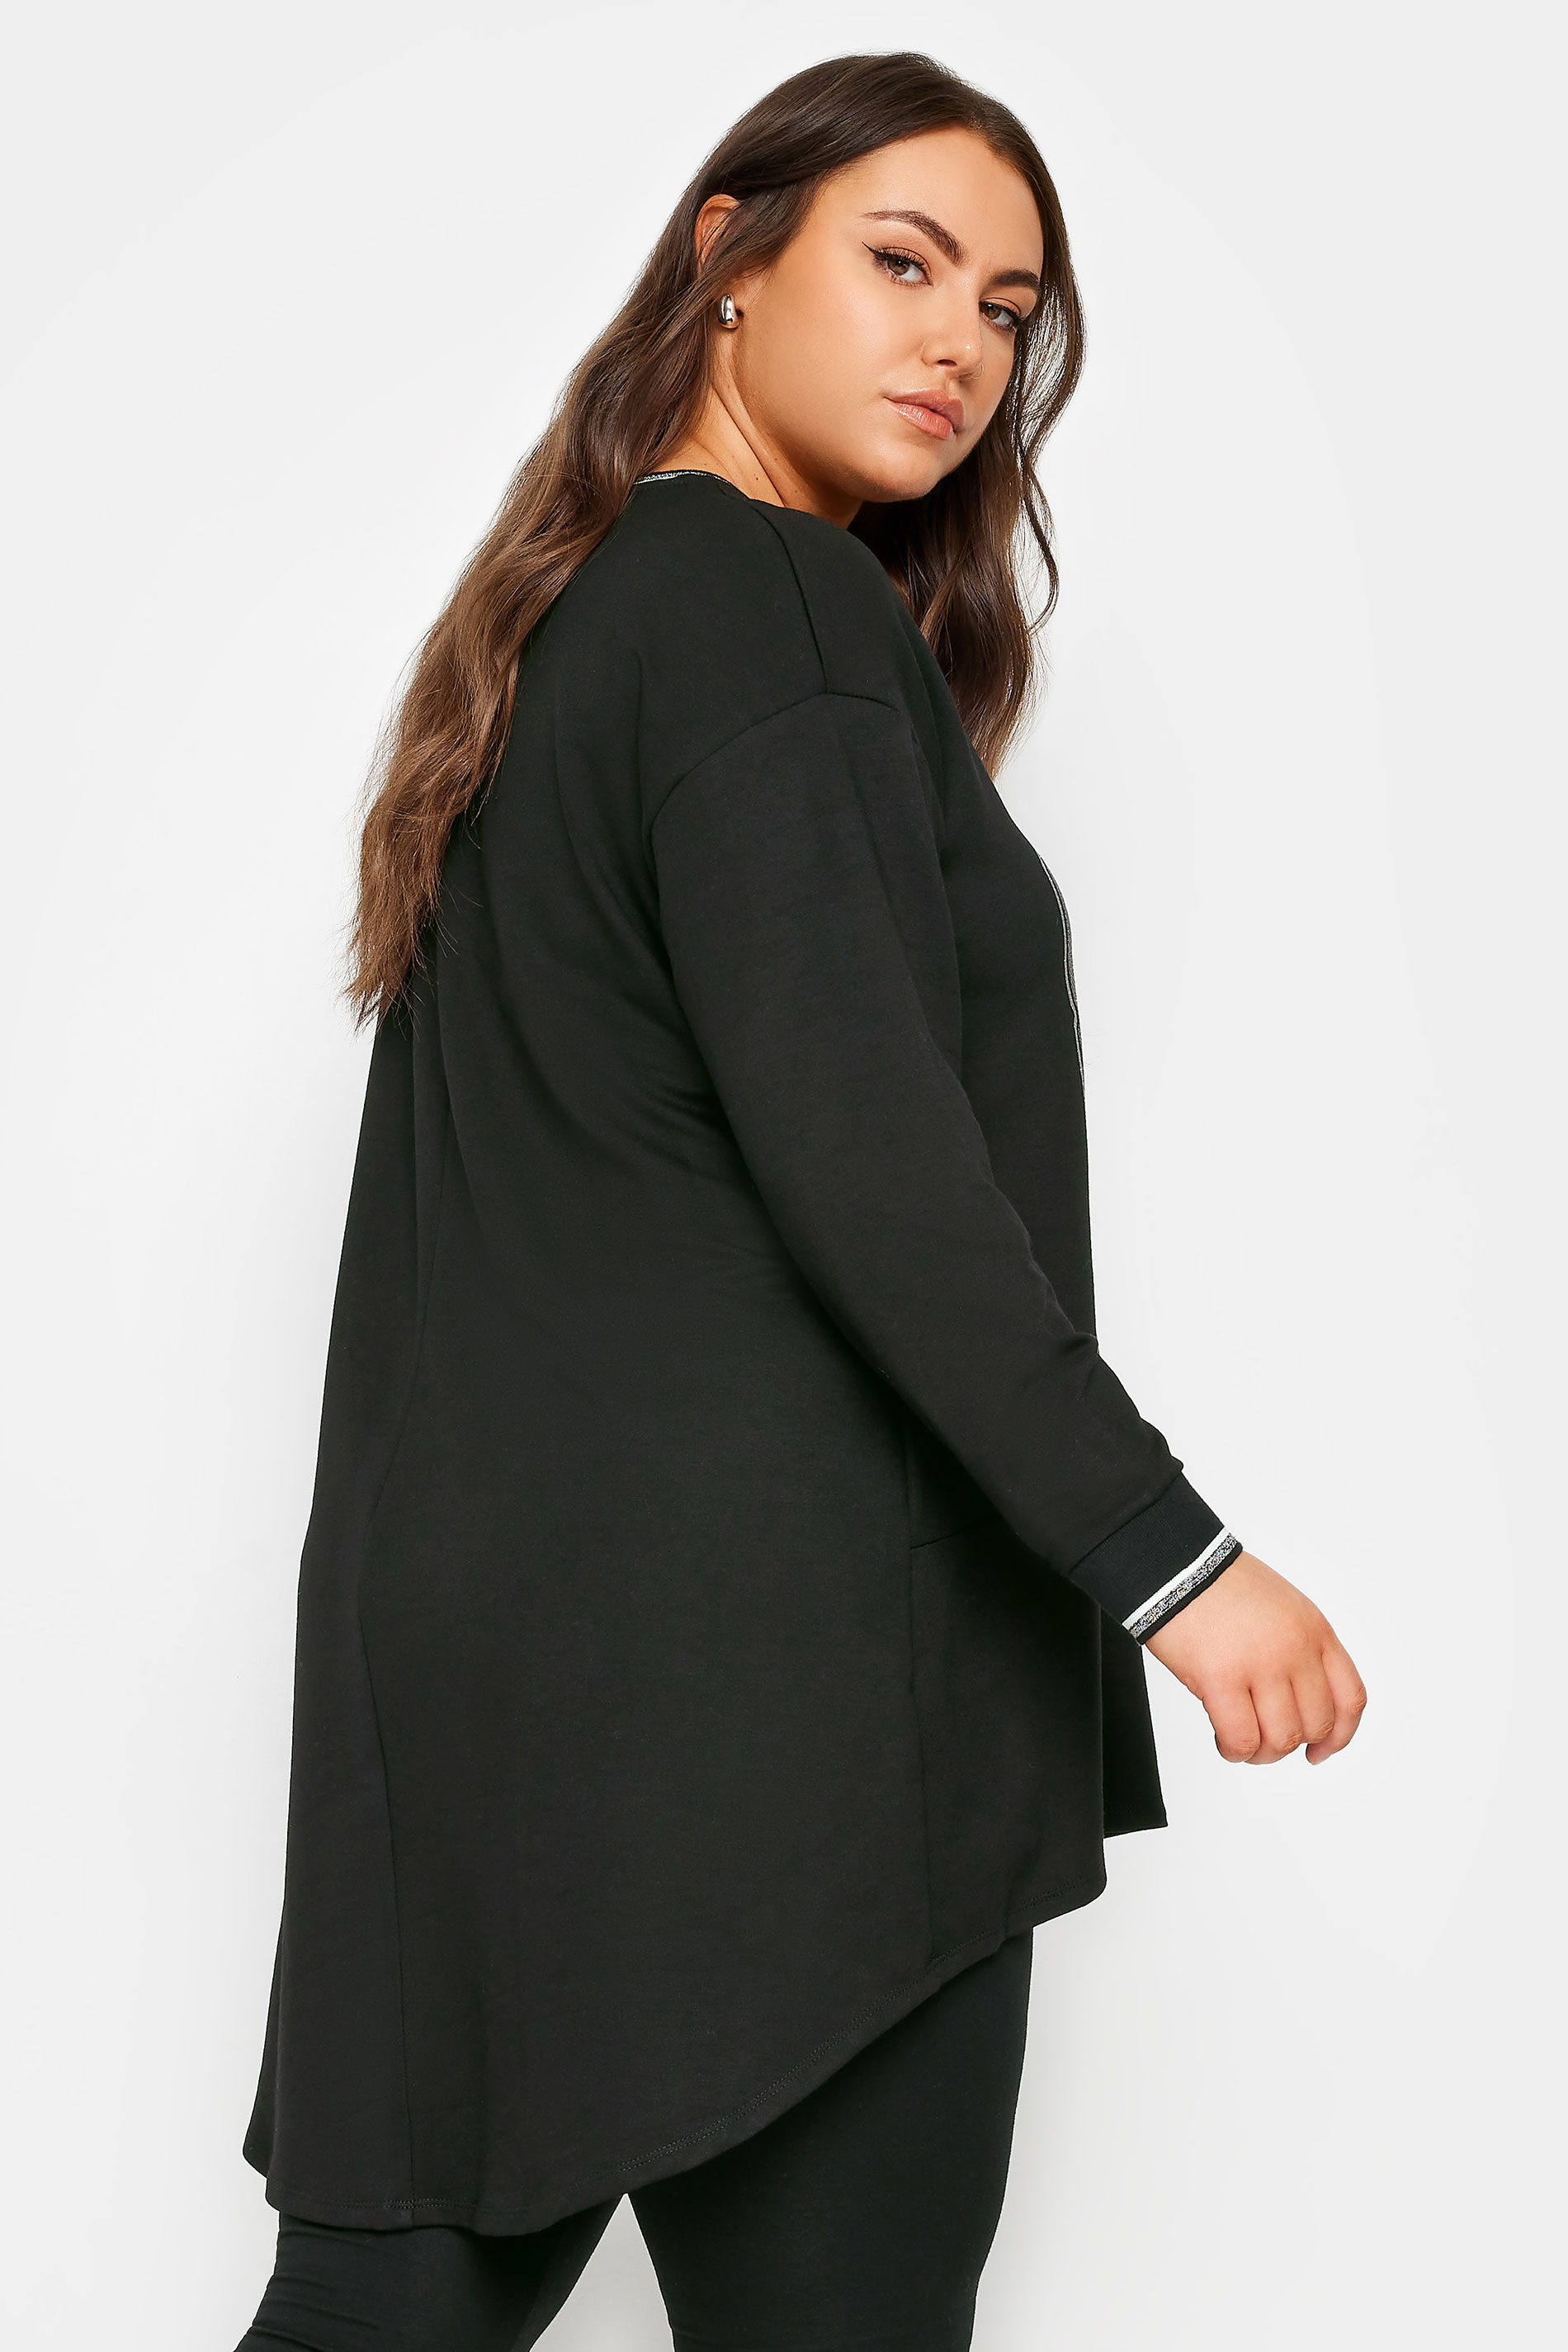 YOURS Plus Size Black 'New York' Glitter Slogan Sweatshirt | Yours Clothing 3